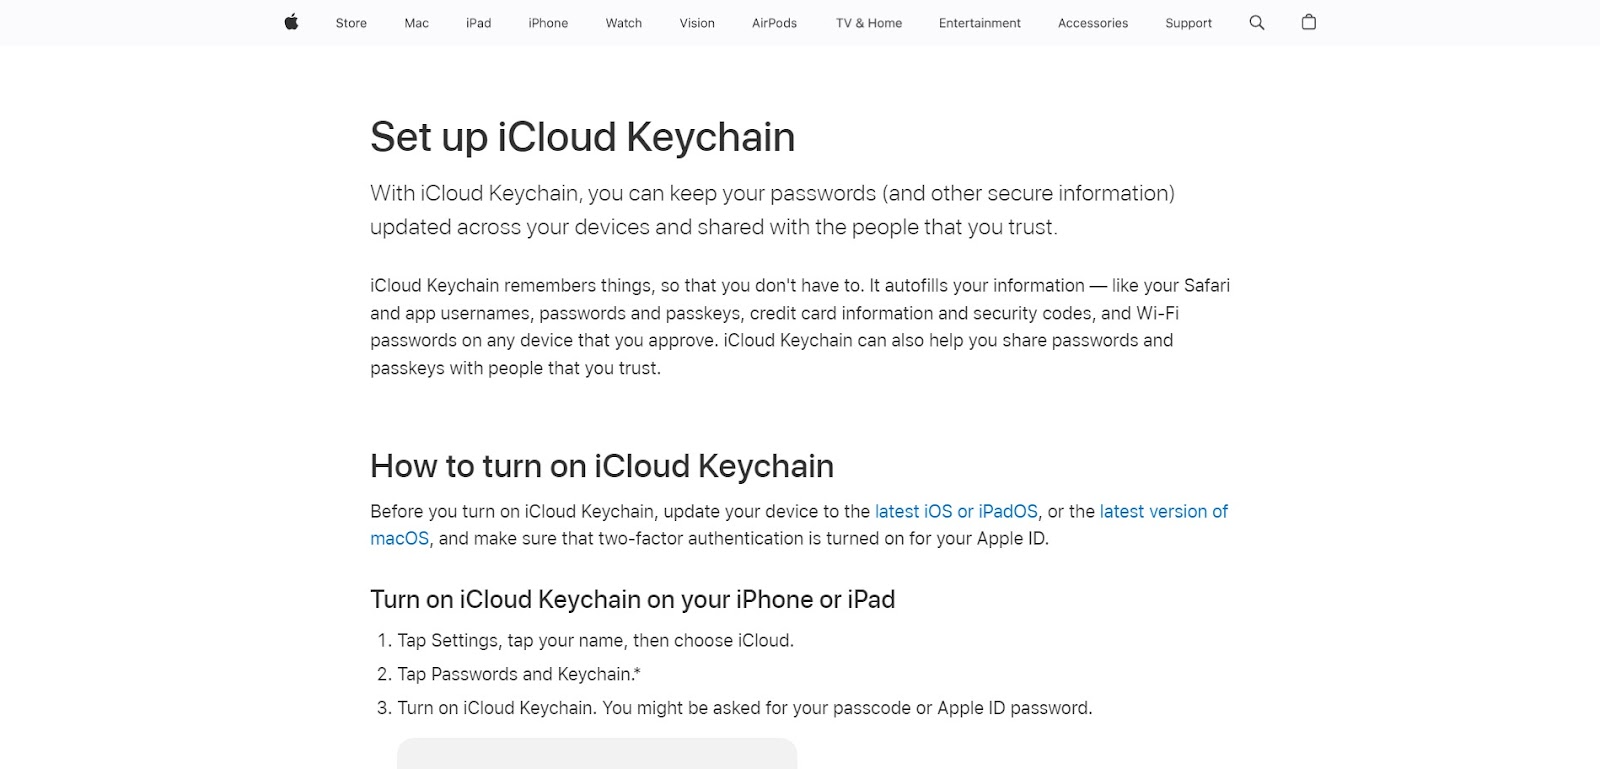 A screenshot of iCloud Keychain's website